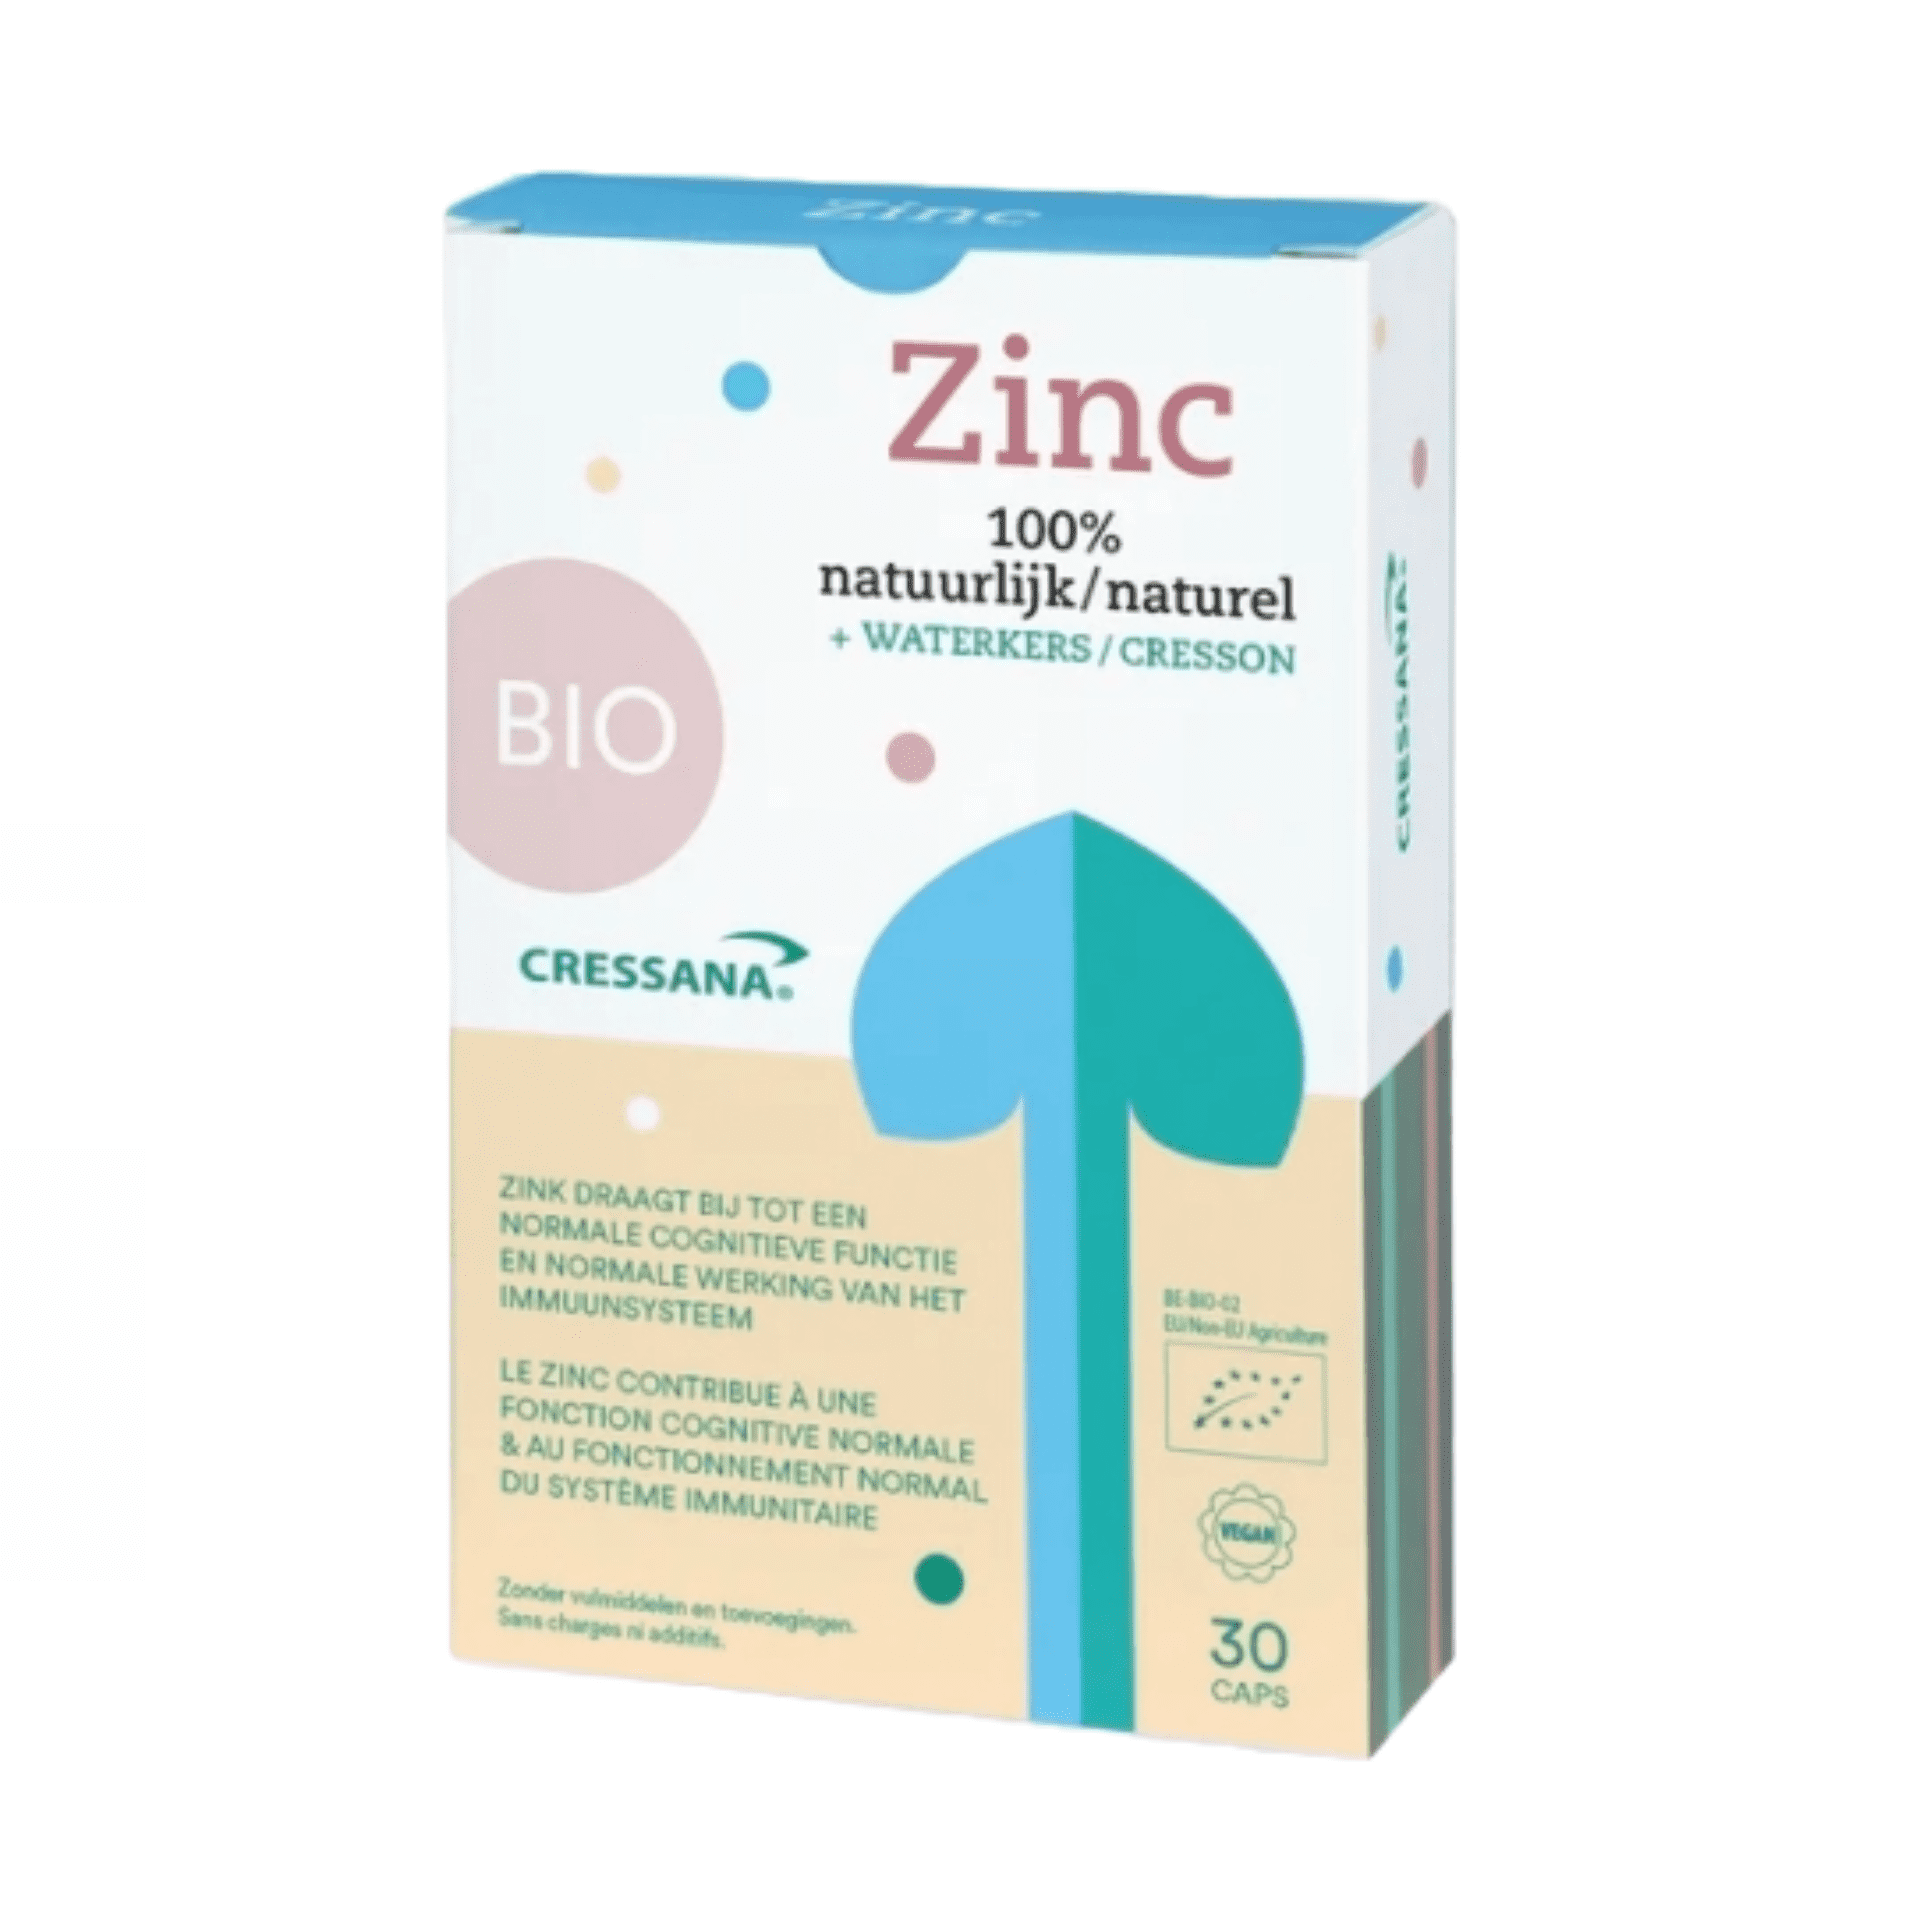 Cressana Bio Zinc + Waterkers 